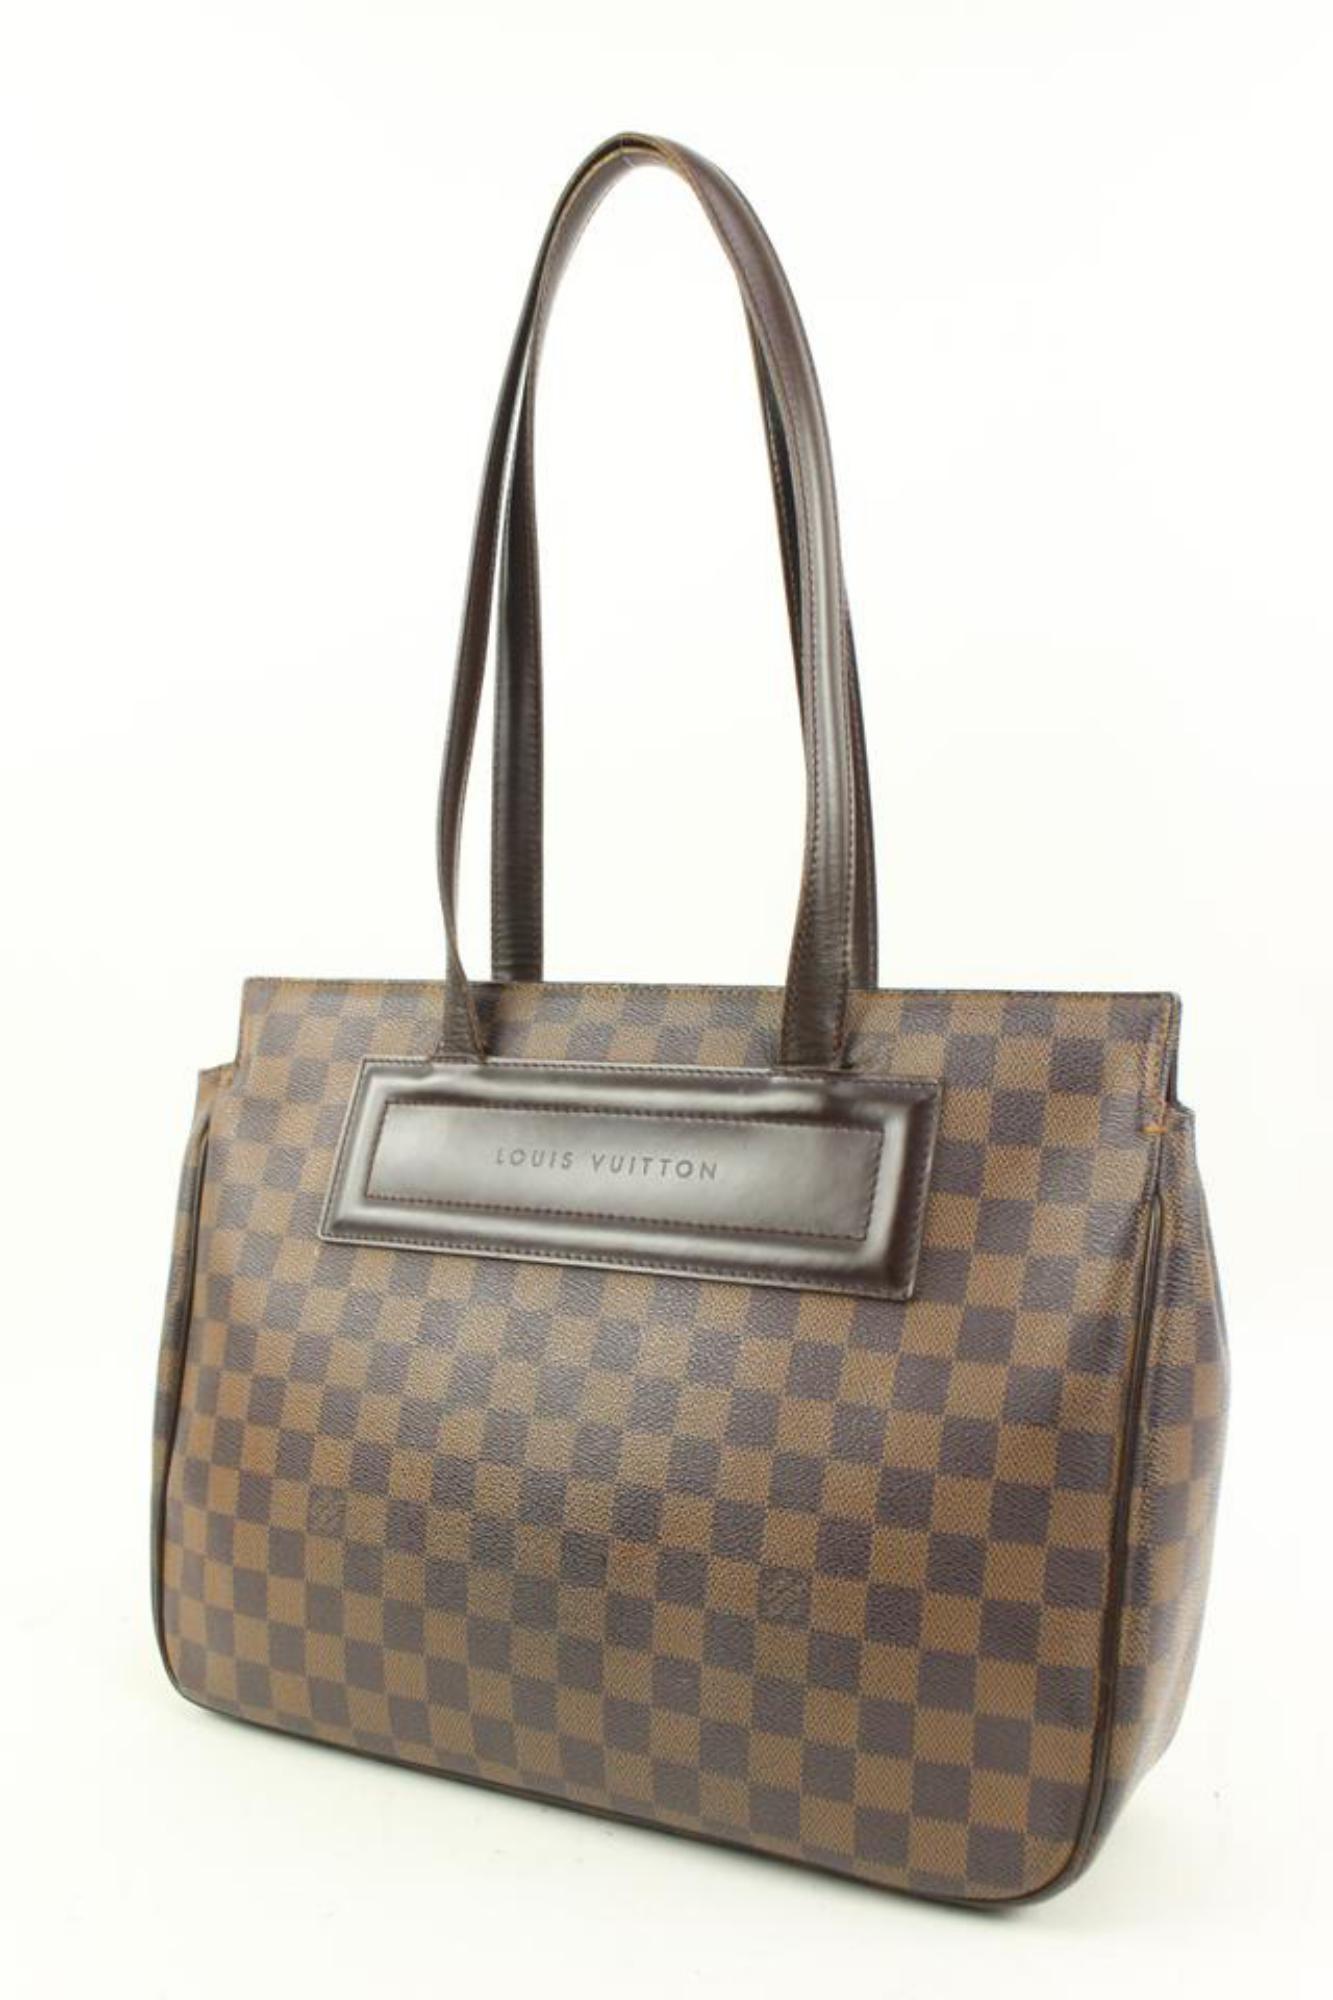 Louis Vuitton Damier Ebene Parioli PM Shopper Tote Bag S215lv94
Date Code/Serial Number: AR0010
Made In: France
Measurements: Length:  13.5